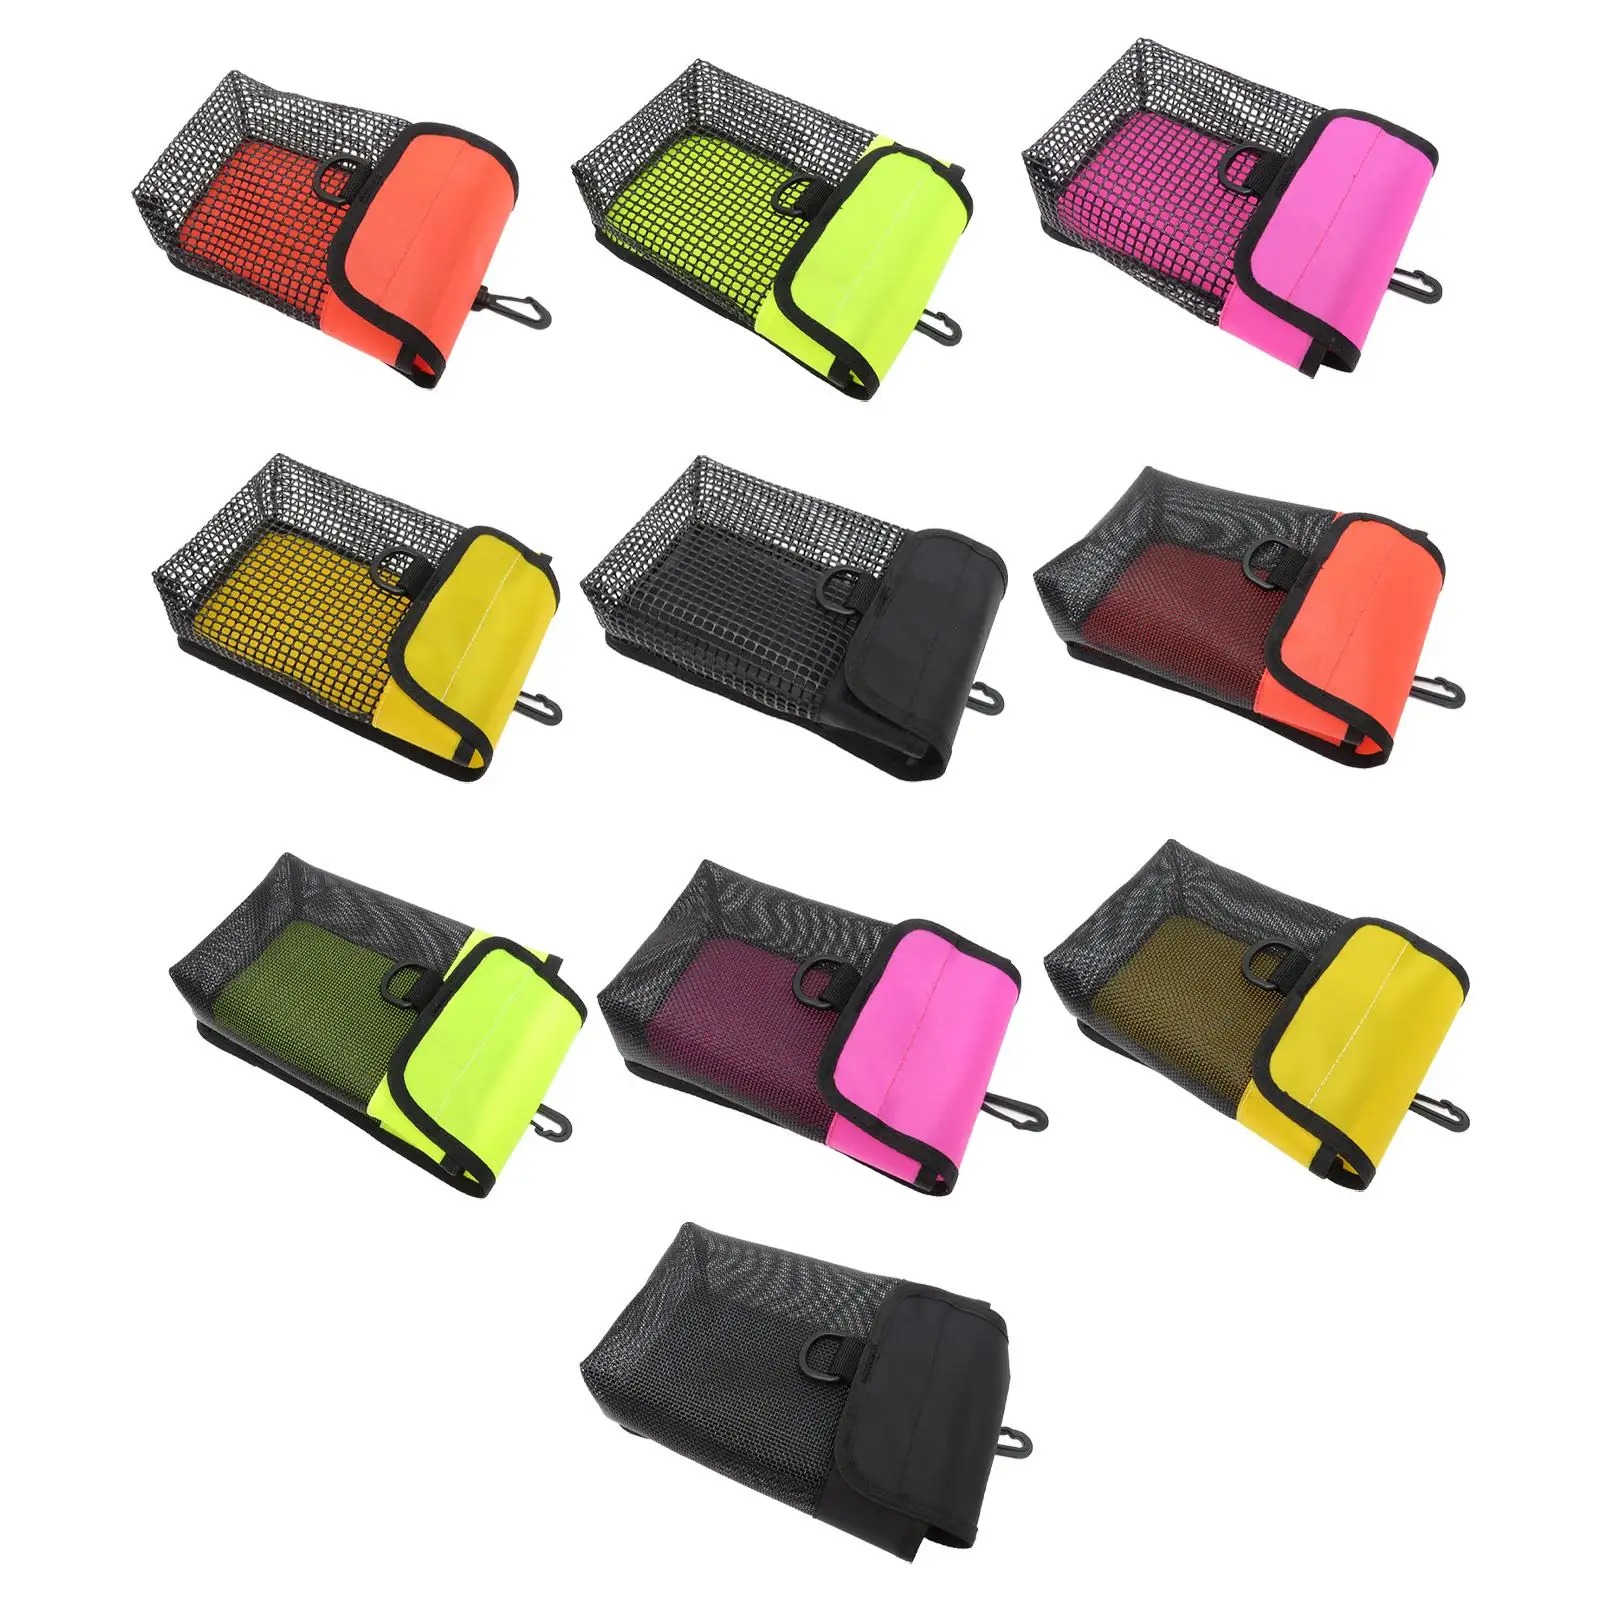 Scuba Gear Storage Bag Mesh Pocket Lightweight Nylon Portable Carry Bag with